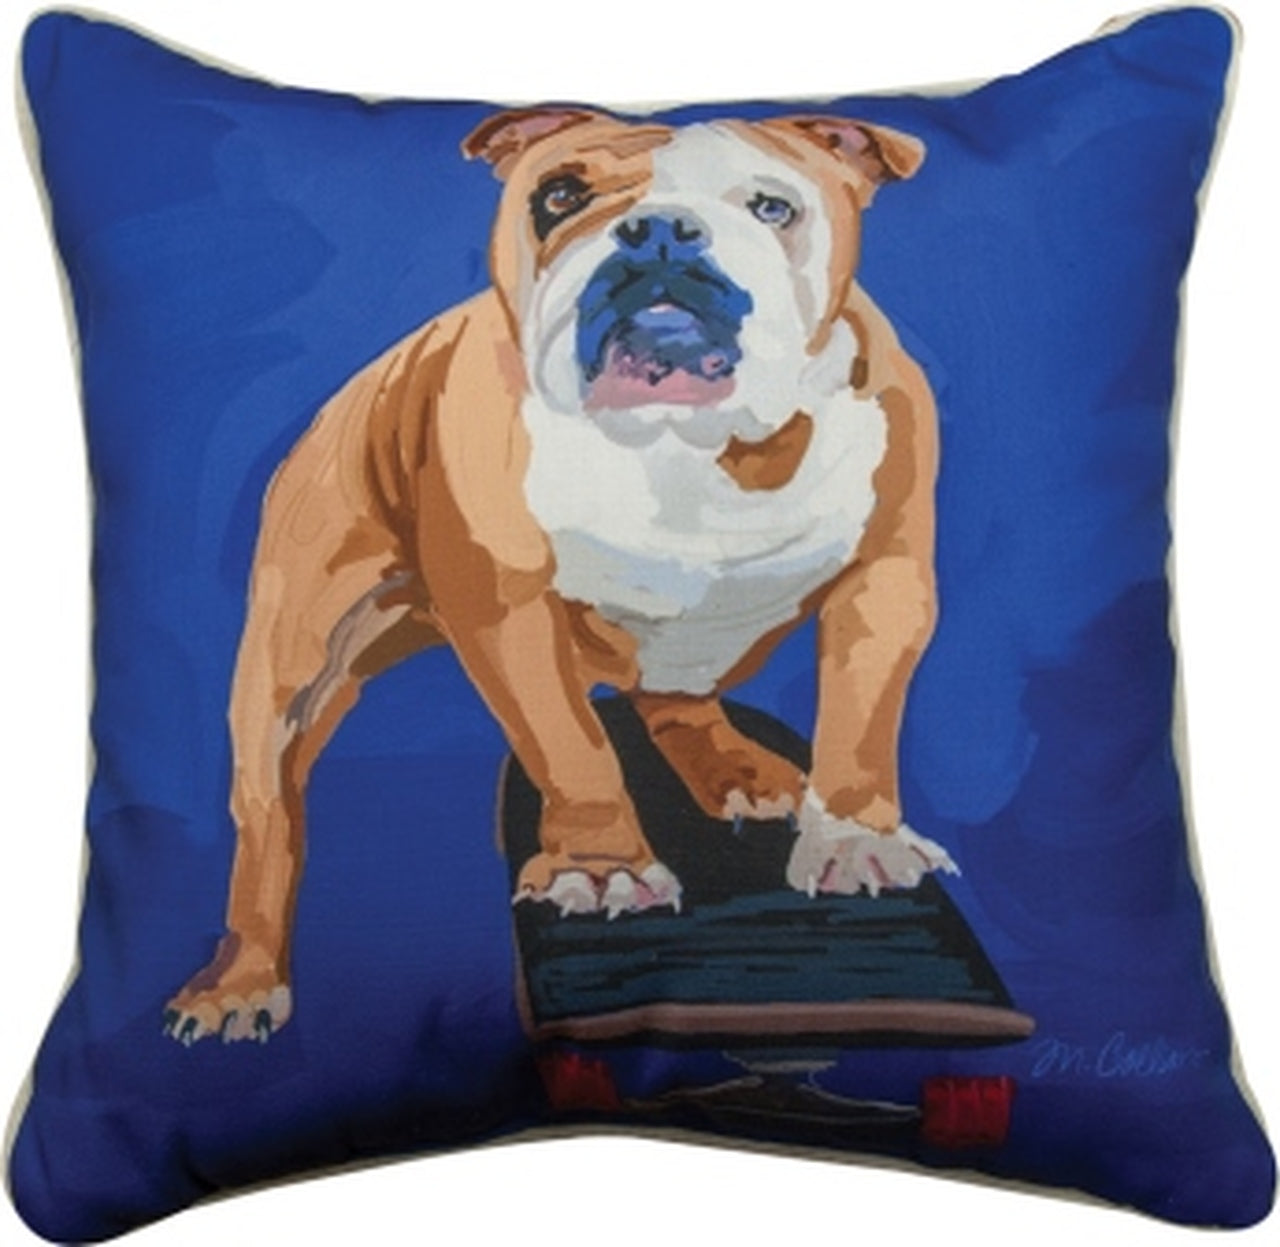 Rodney The Bulldog Pillow